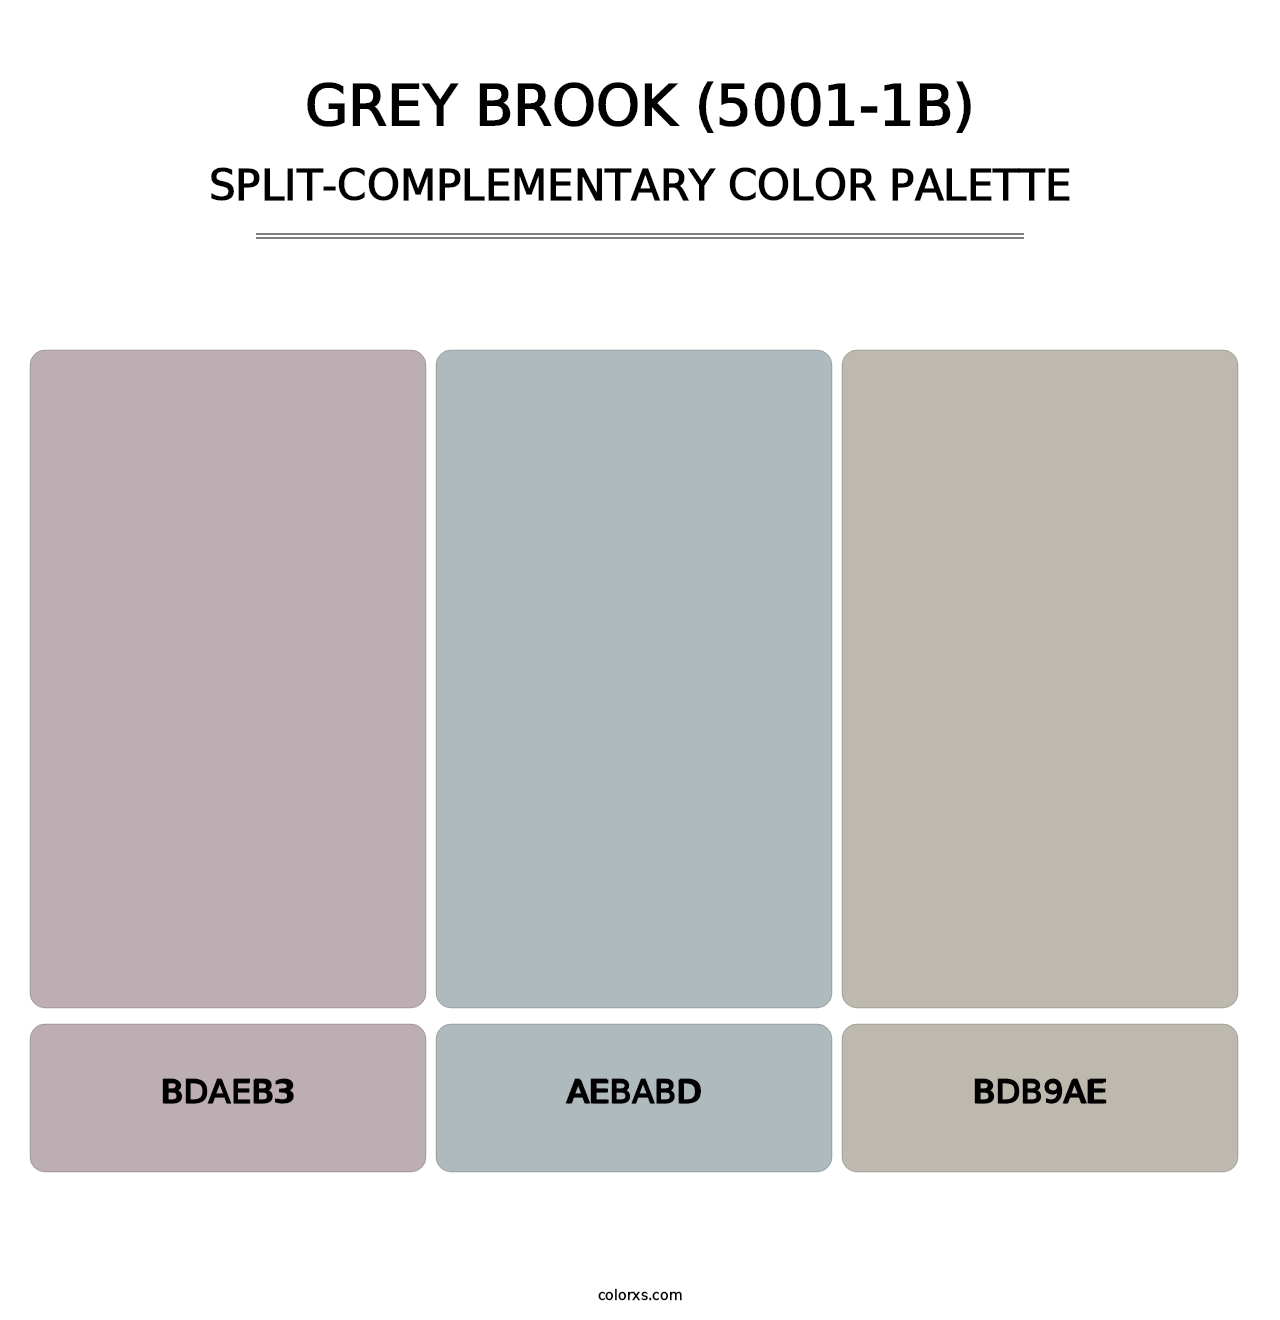 Grey Brook (5001-1B) - Split-Complementary Color Palette